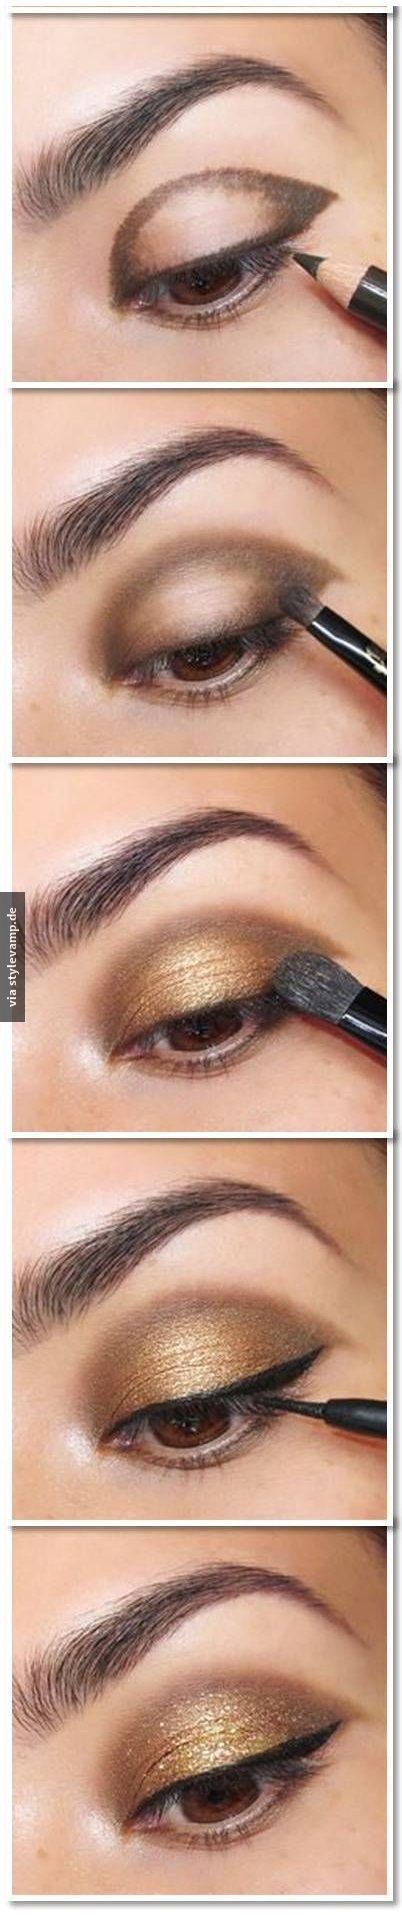 base-makeup-tutorial-dailymotion-65_14 Basis make-up tutorial dailymotion